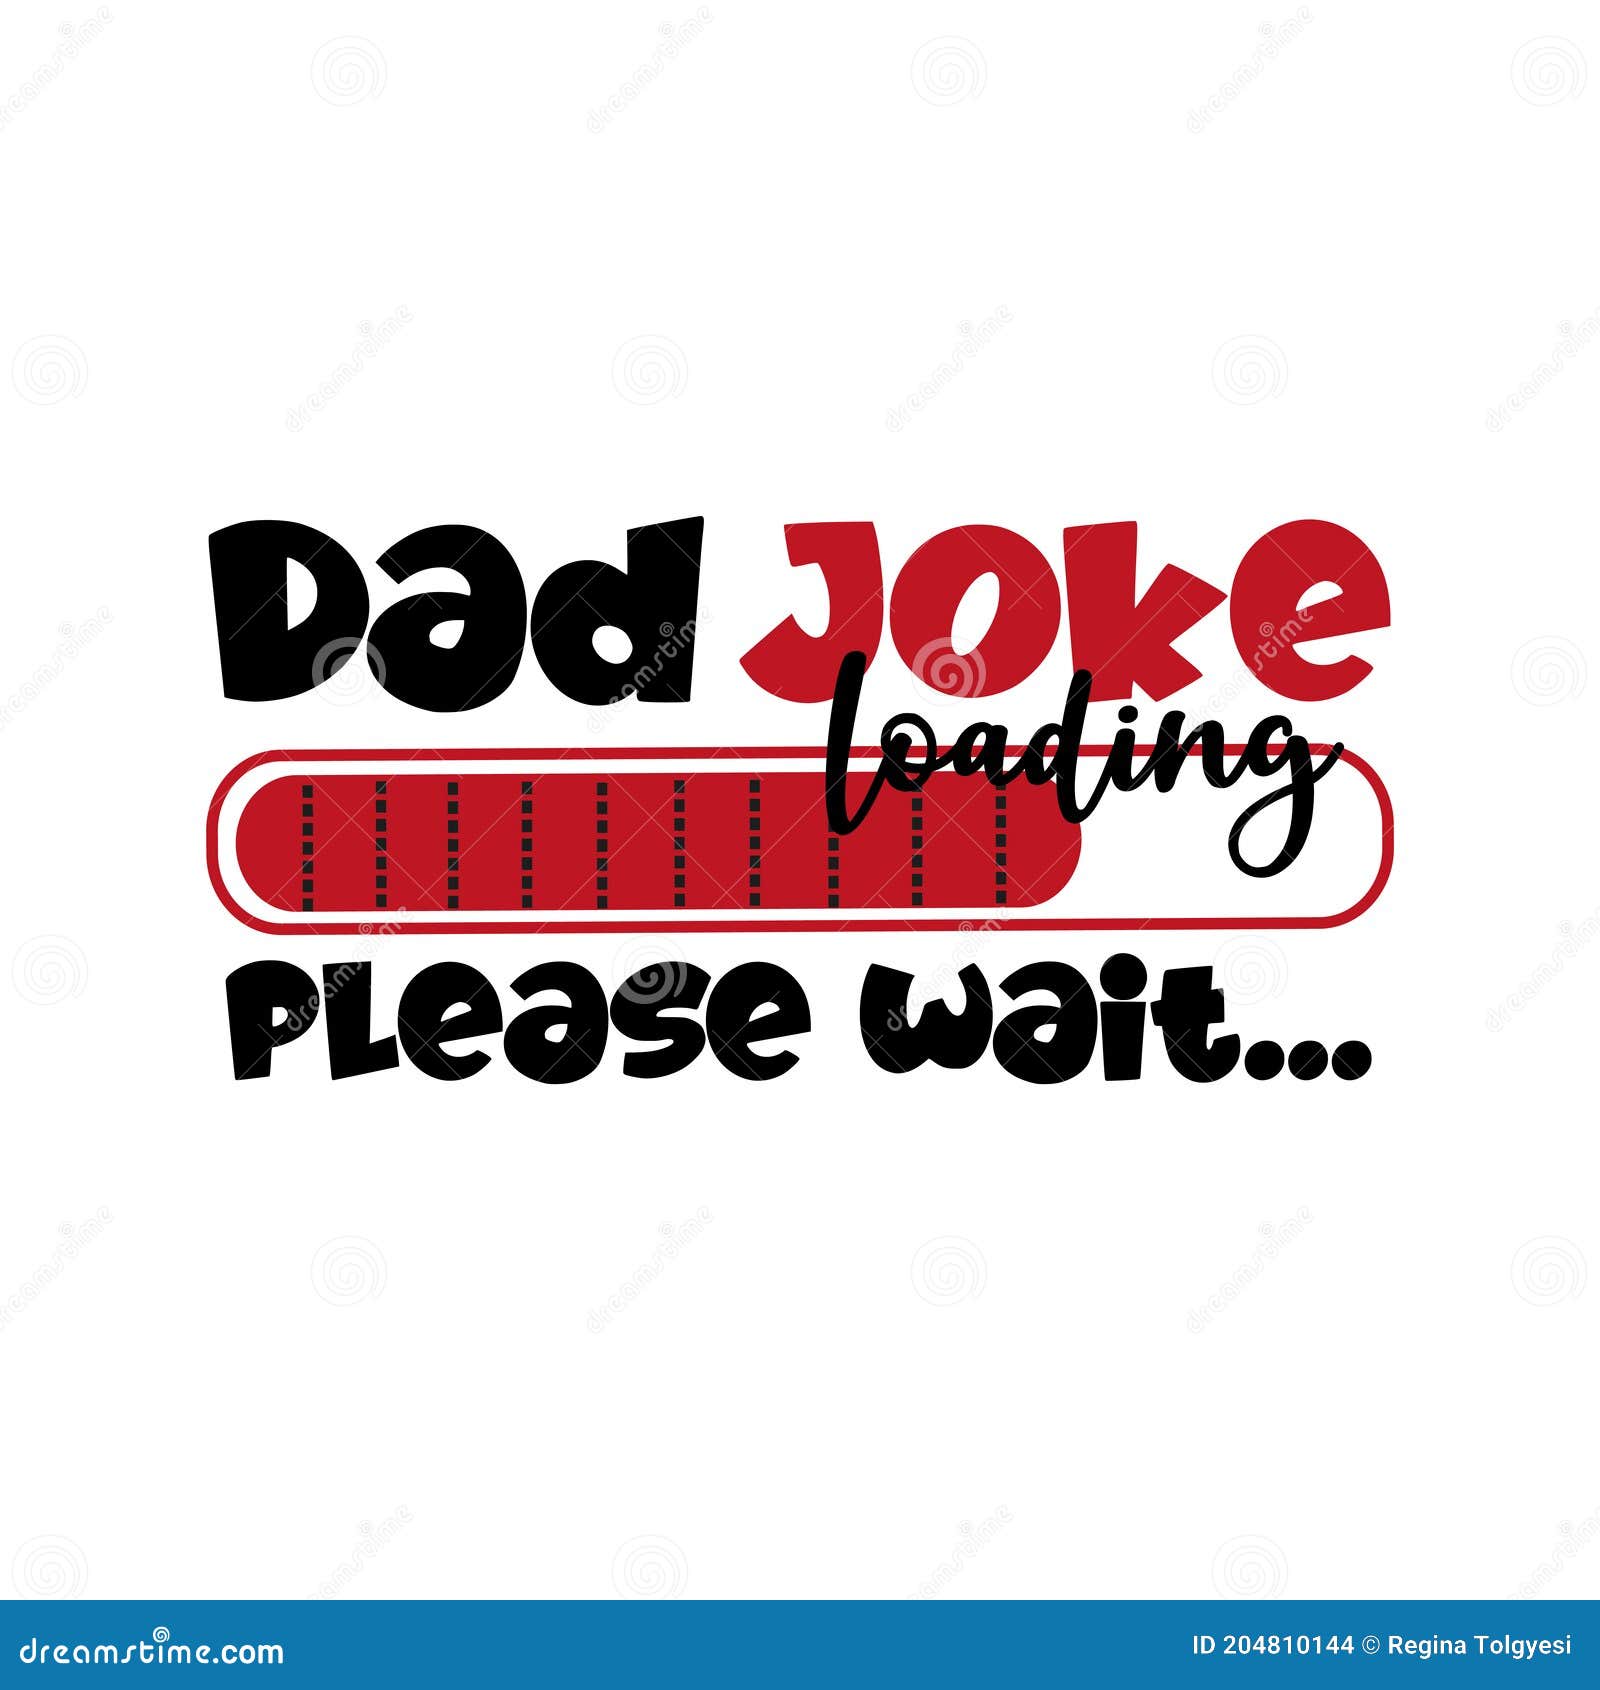 dad joke loading, please wait... - funny phrase for father